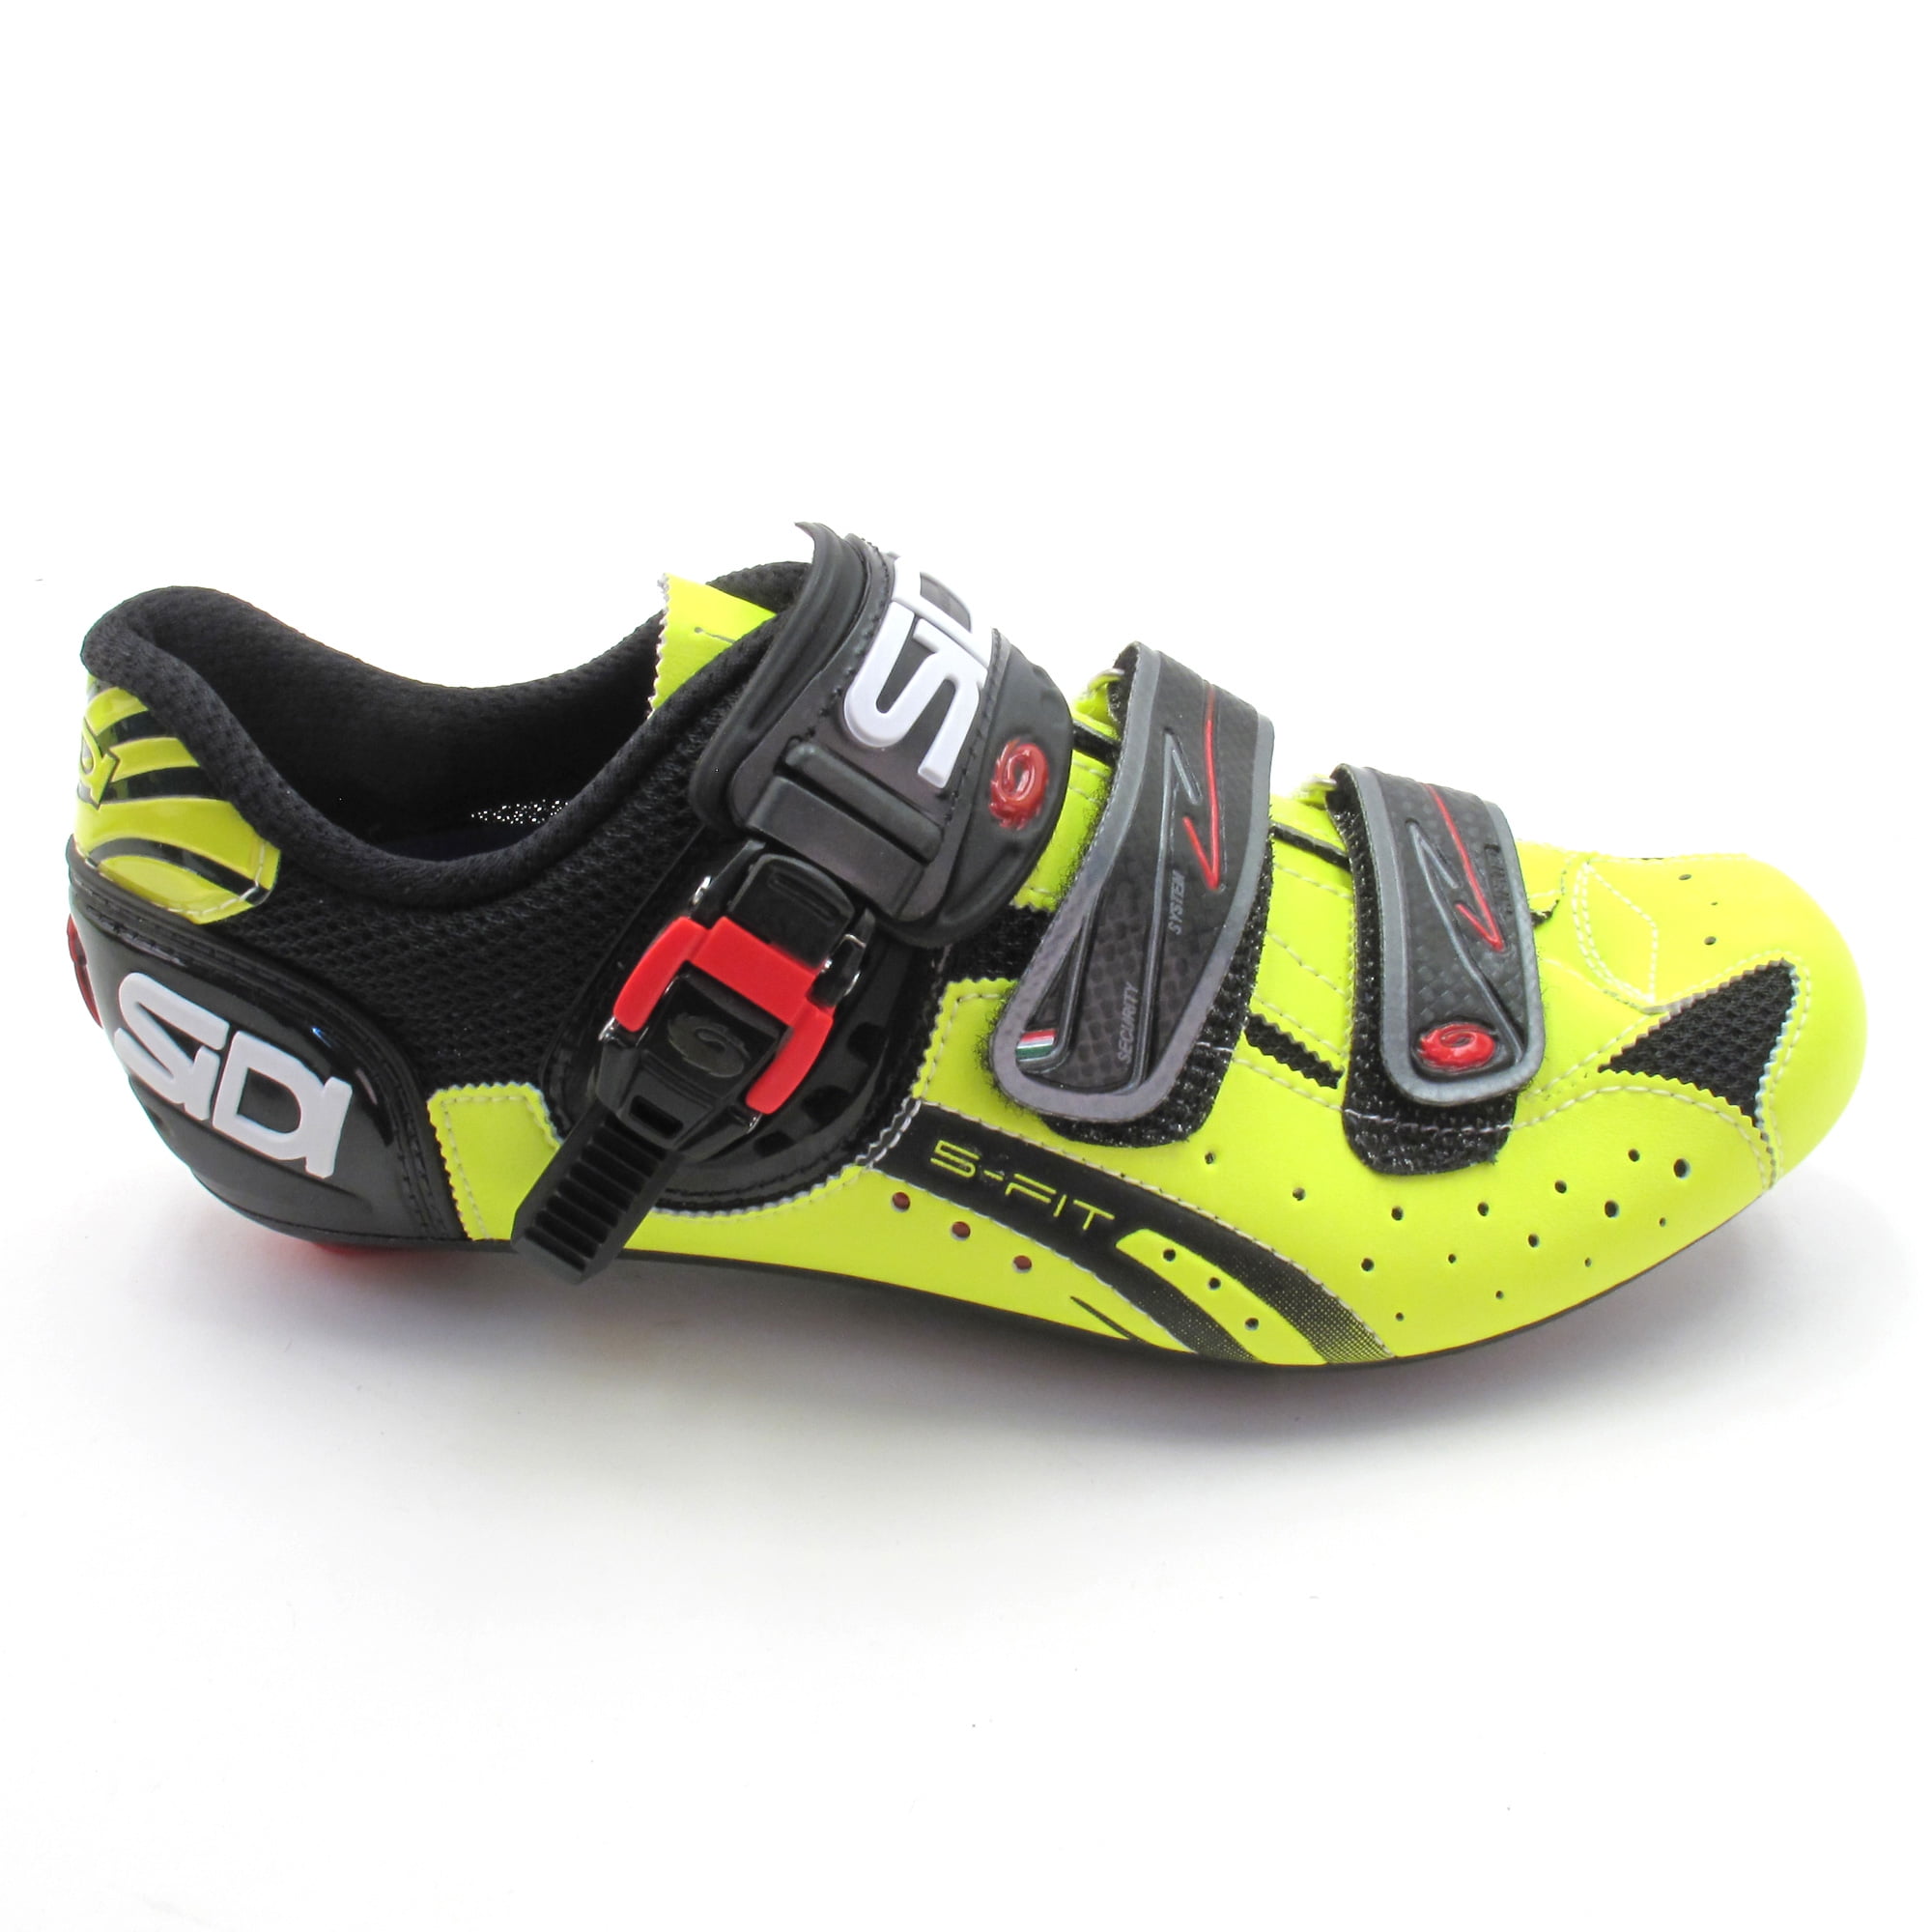 Sidi Genius 5 Fit Black / Yellow Road Bike Cycling Shoes // EUR 42 